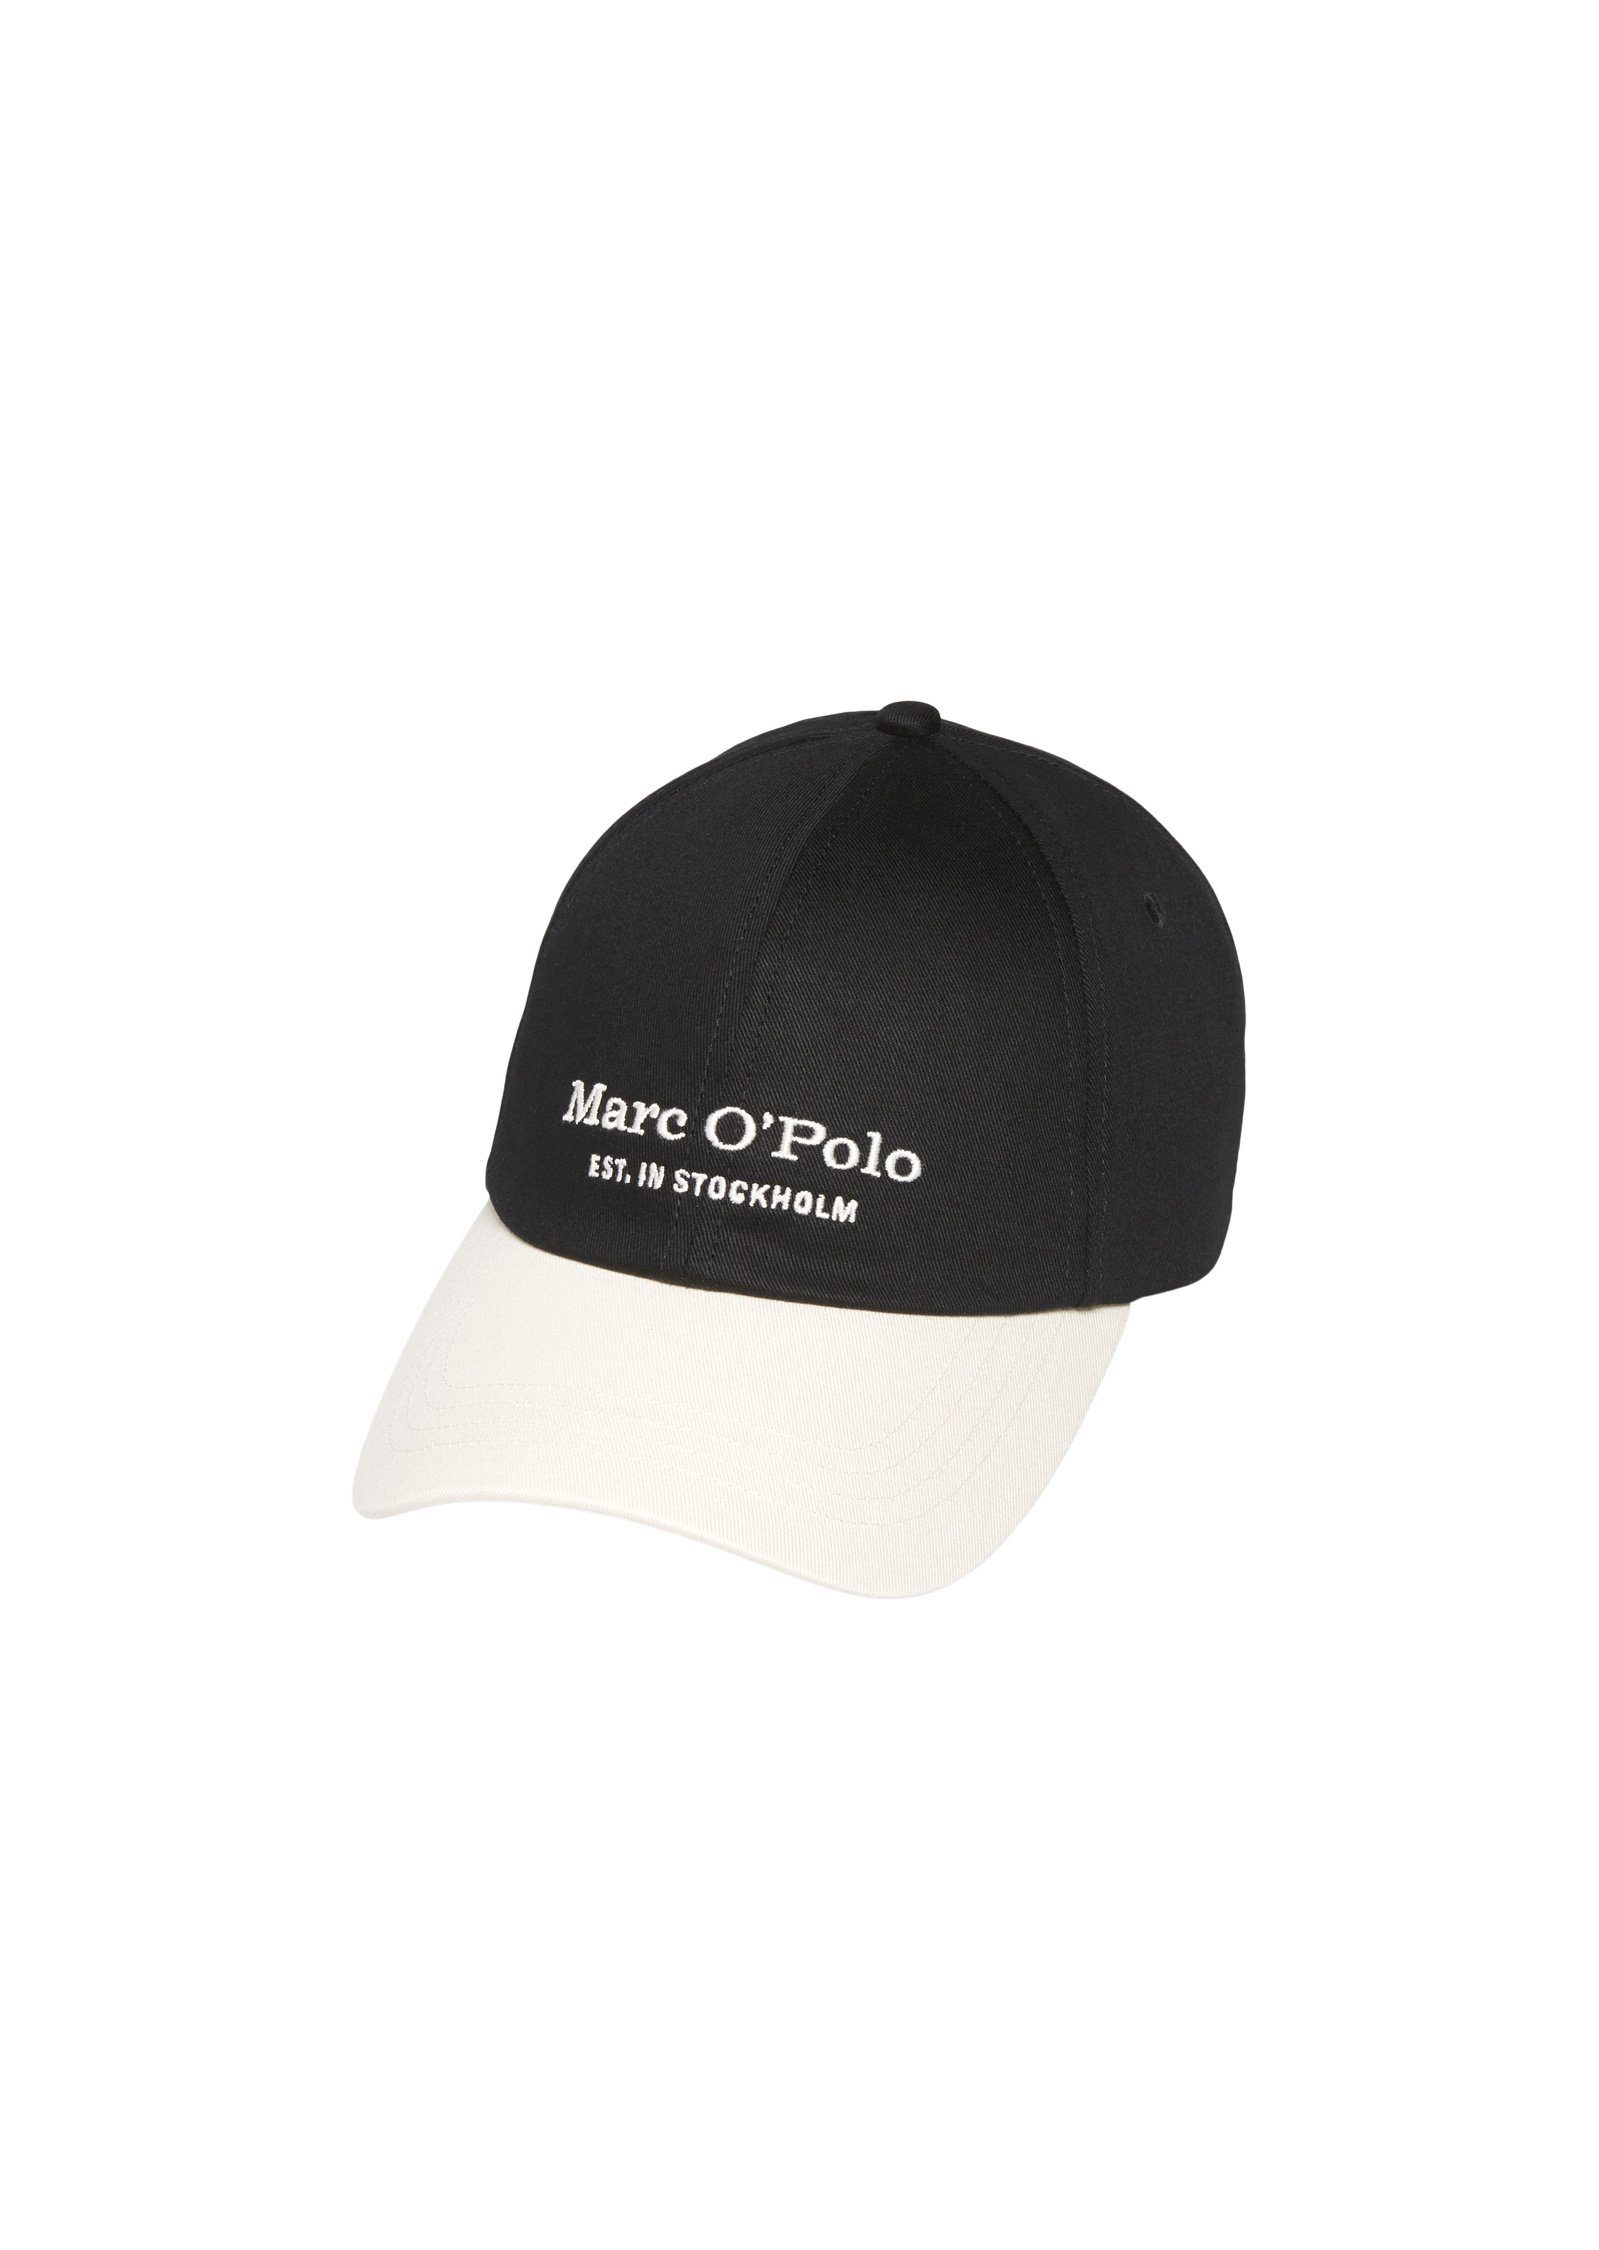 Marc O\'Polo Baseball Cap aus reinem Organic Cotton, One size fits all,  verstellbar